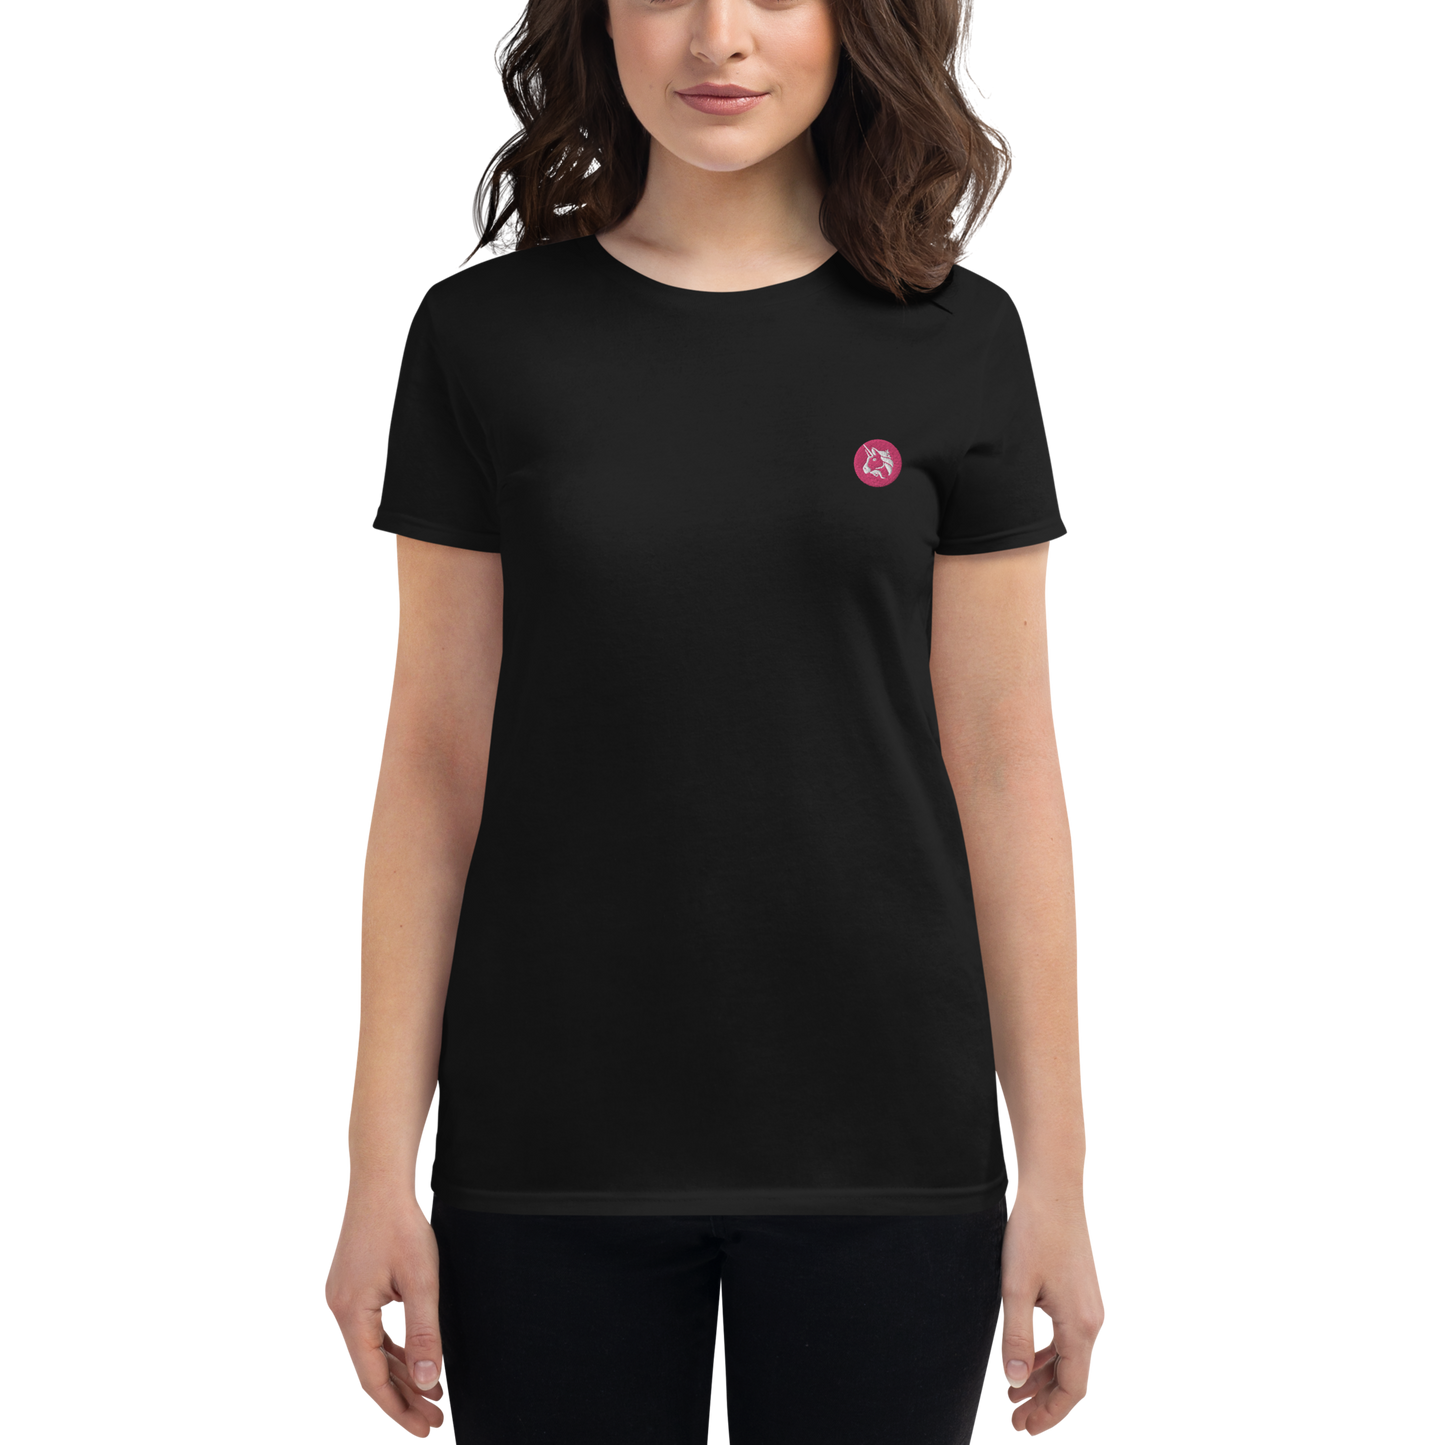 Uniswap (UNI) - Women's short sleeve t-shirt